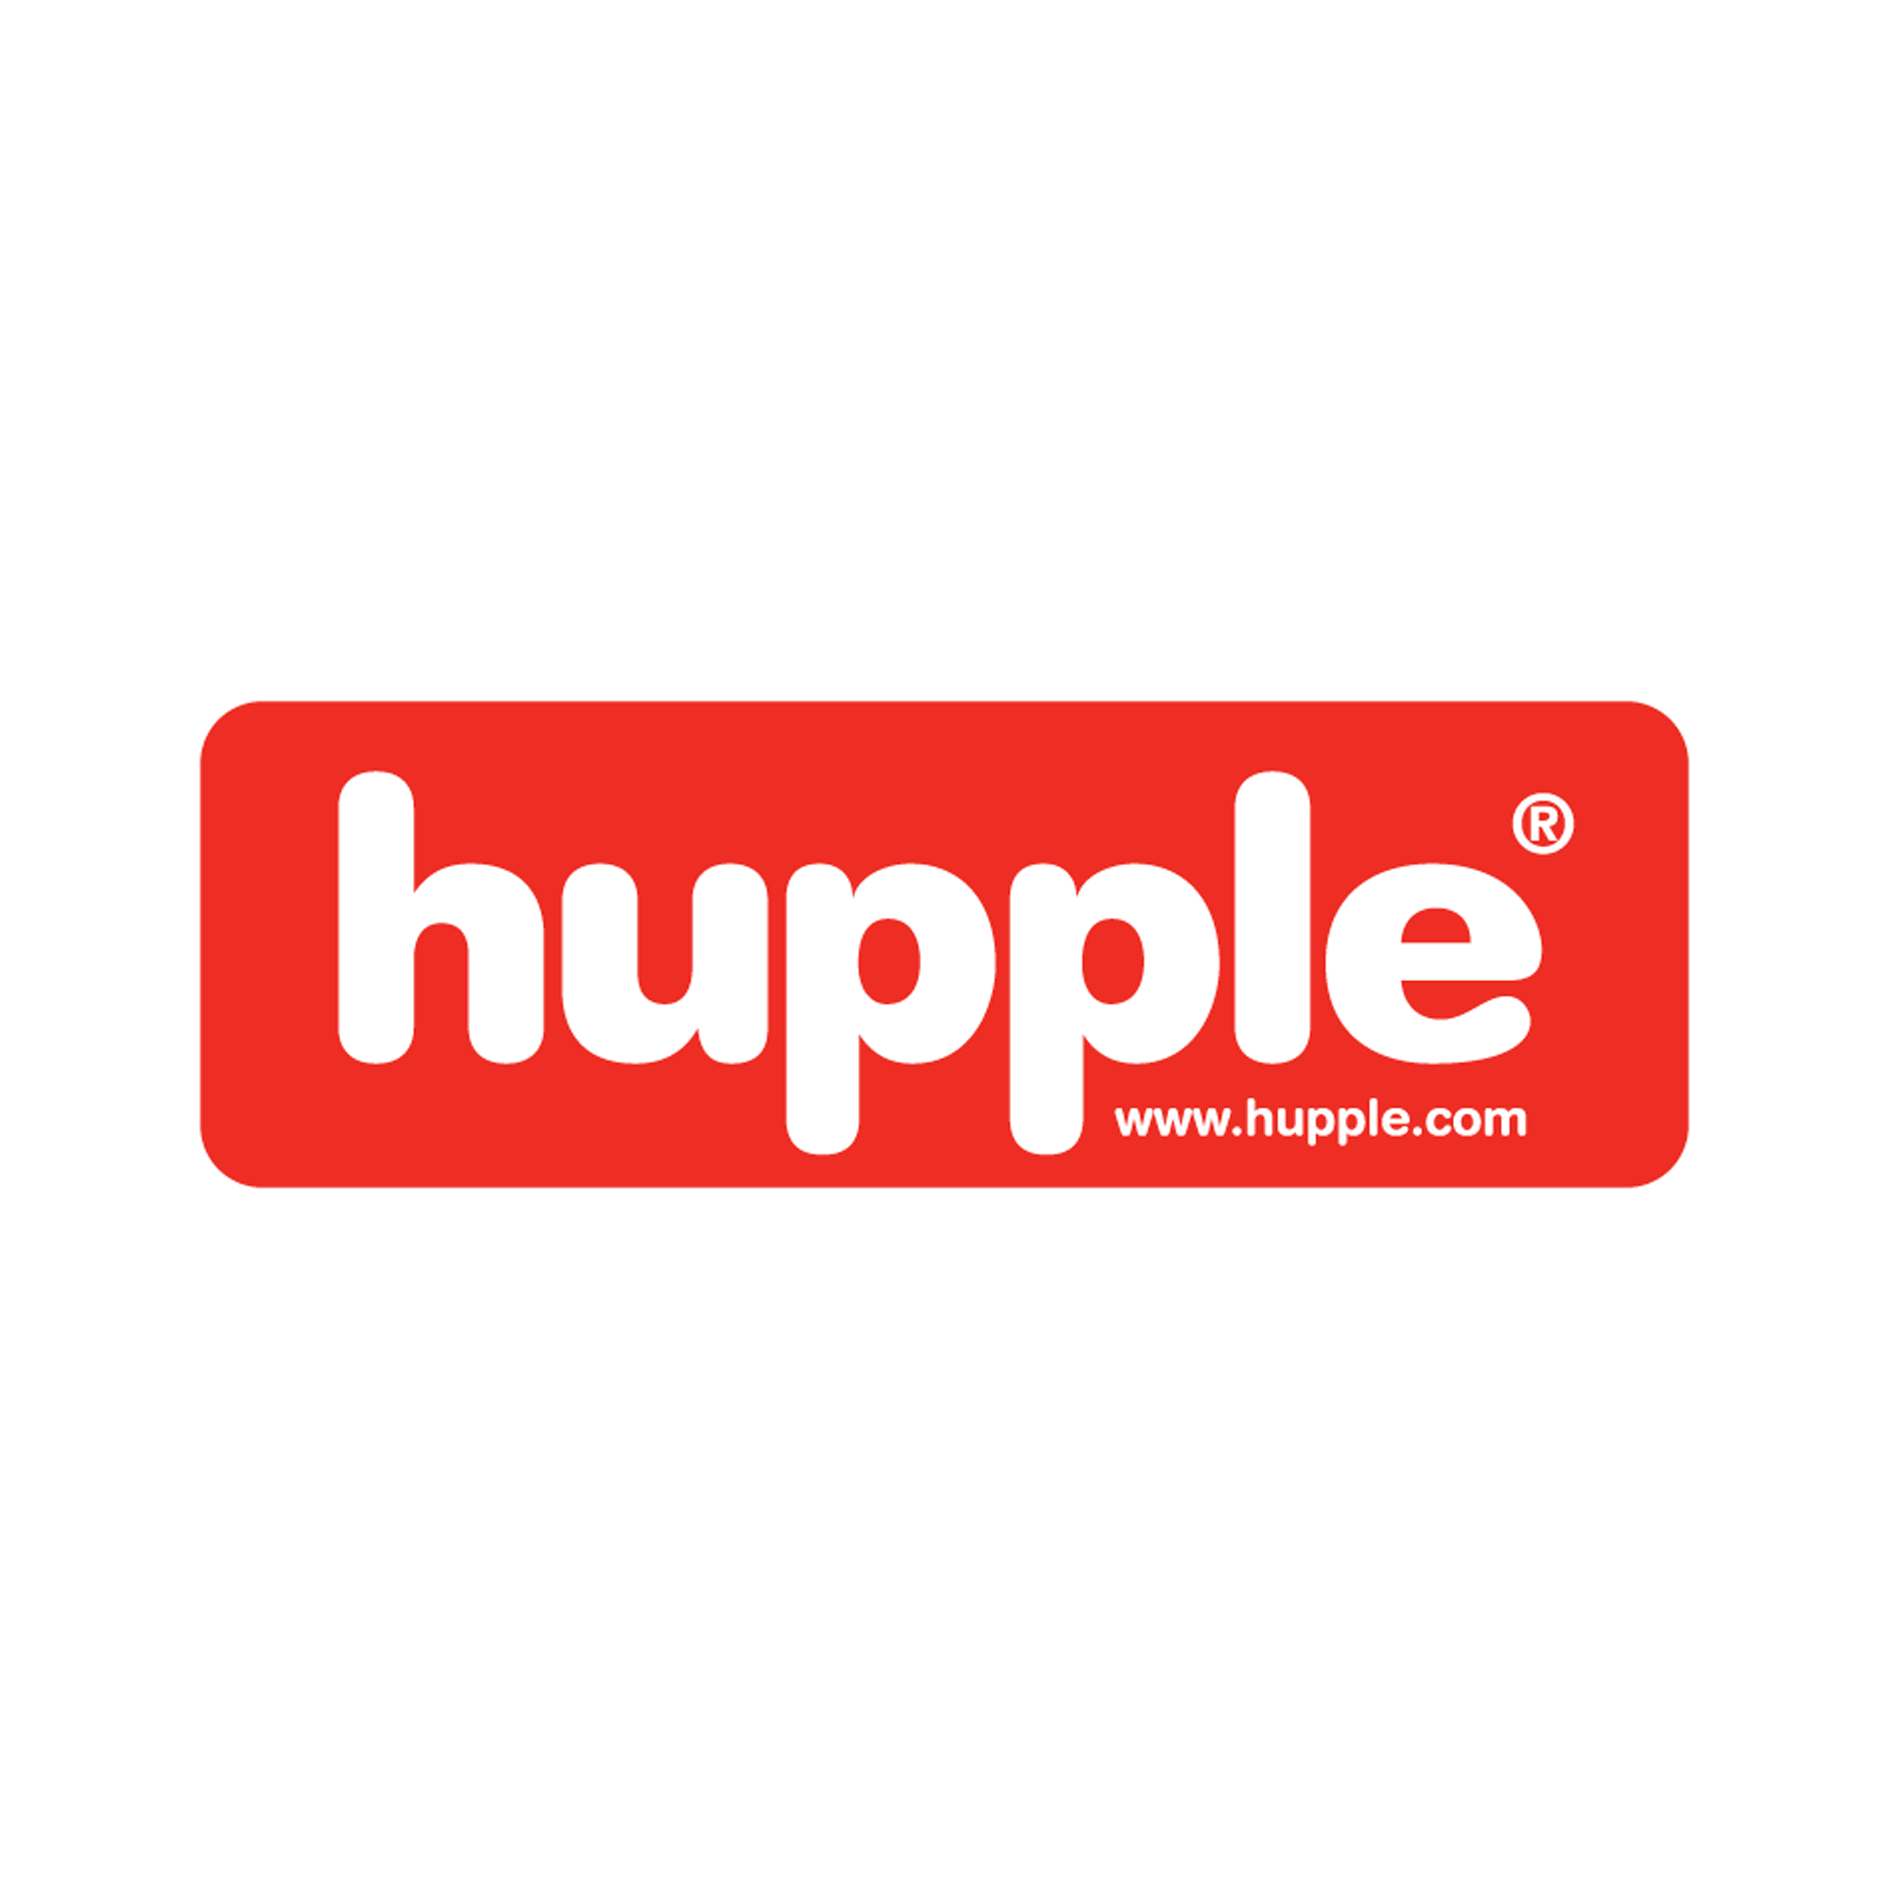 hupple transparant.png